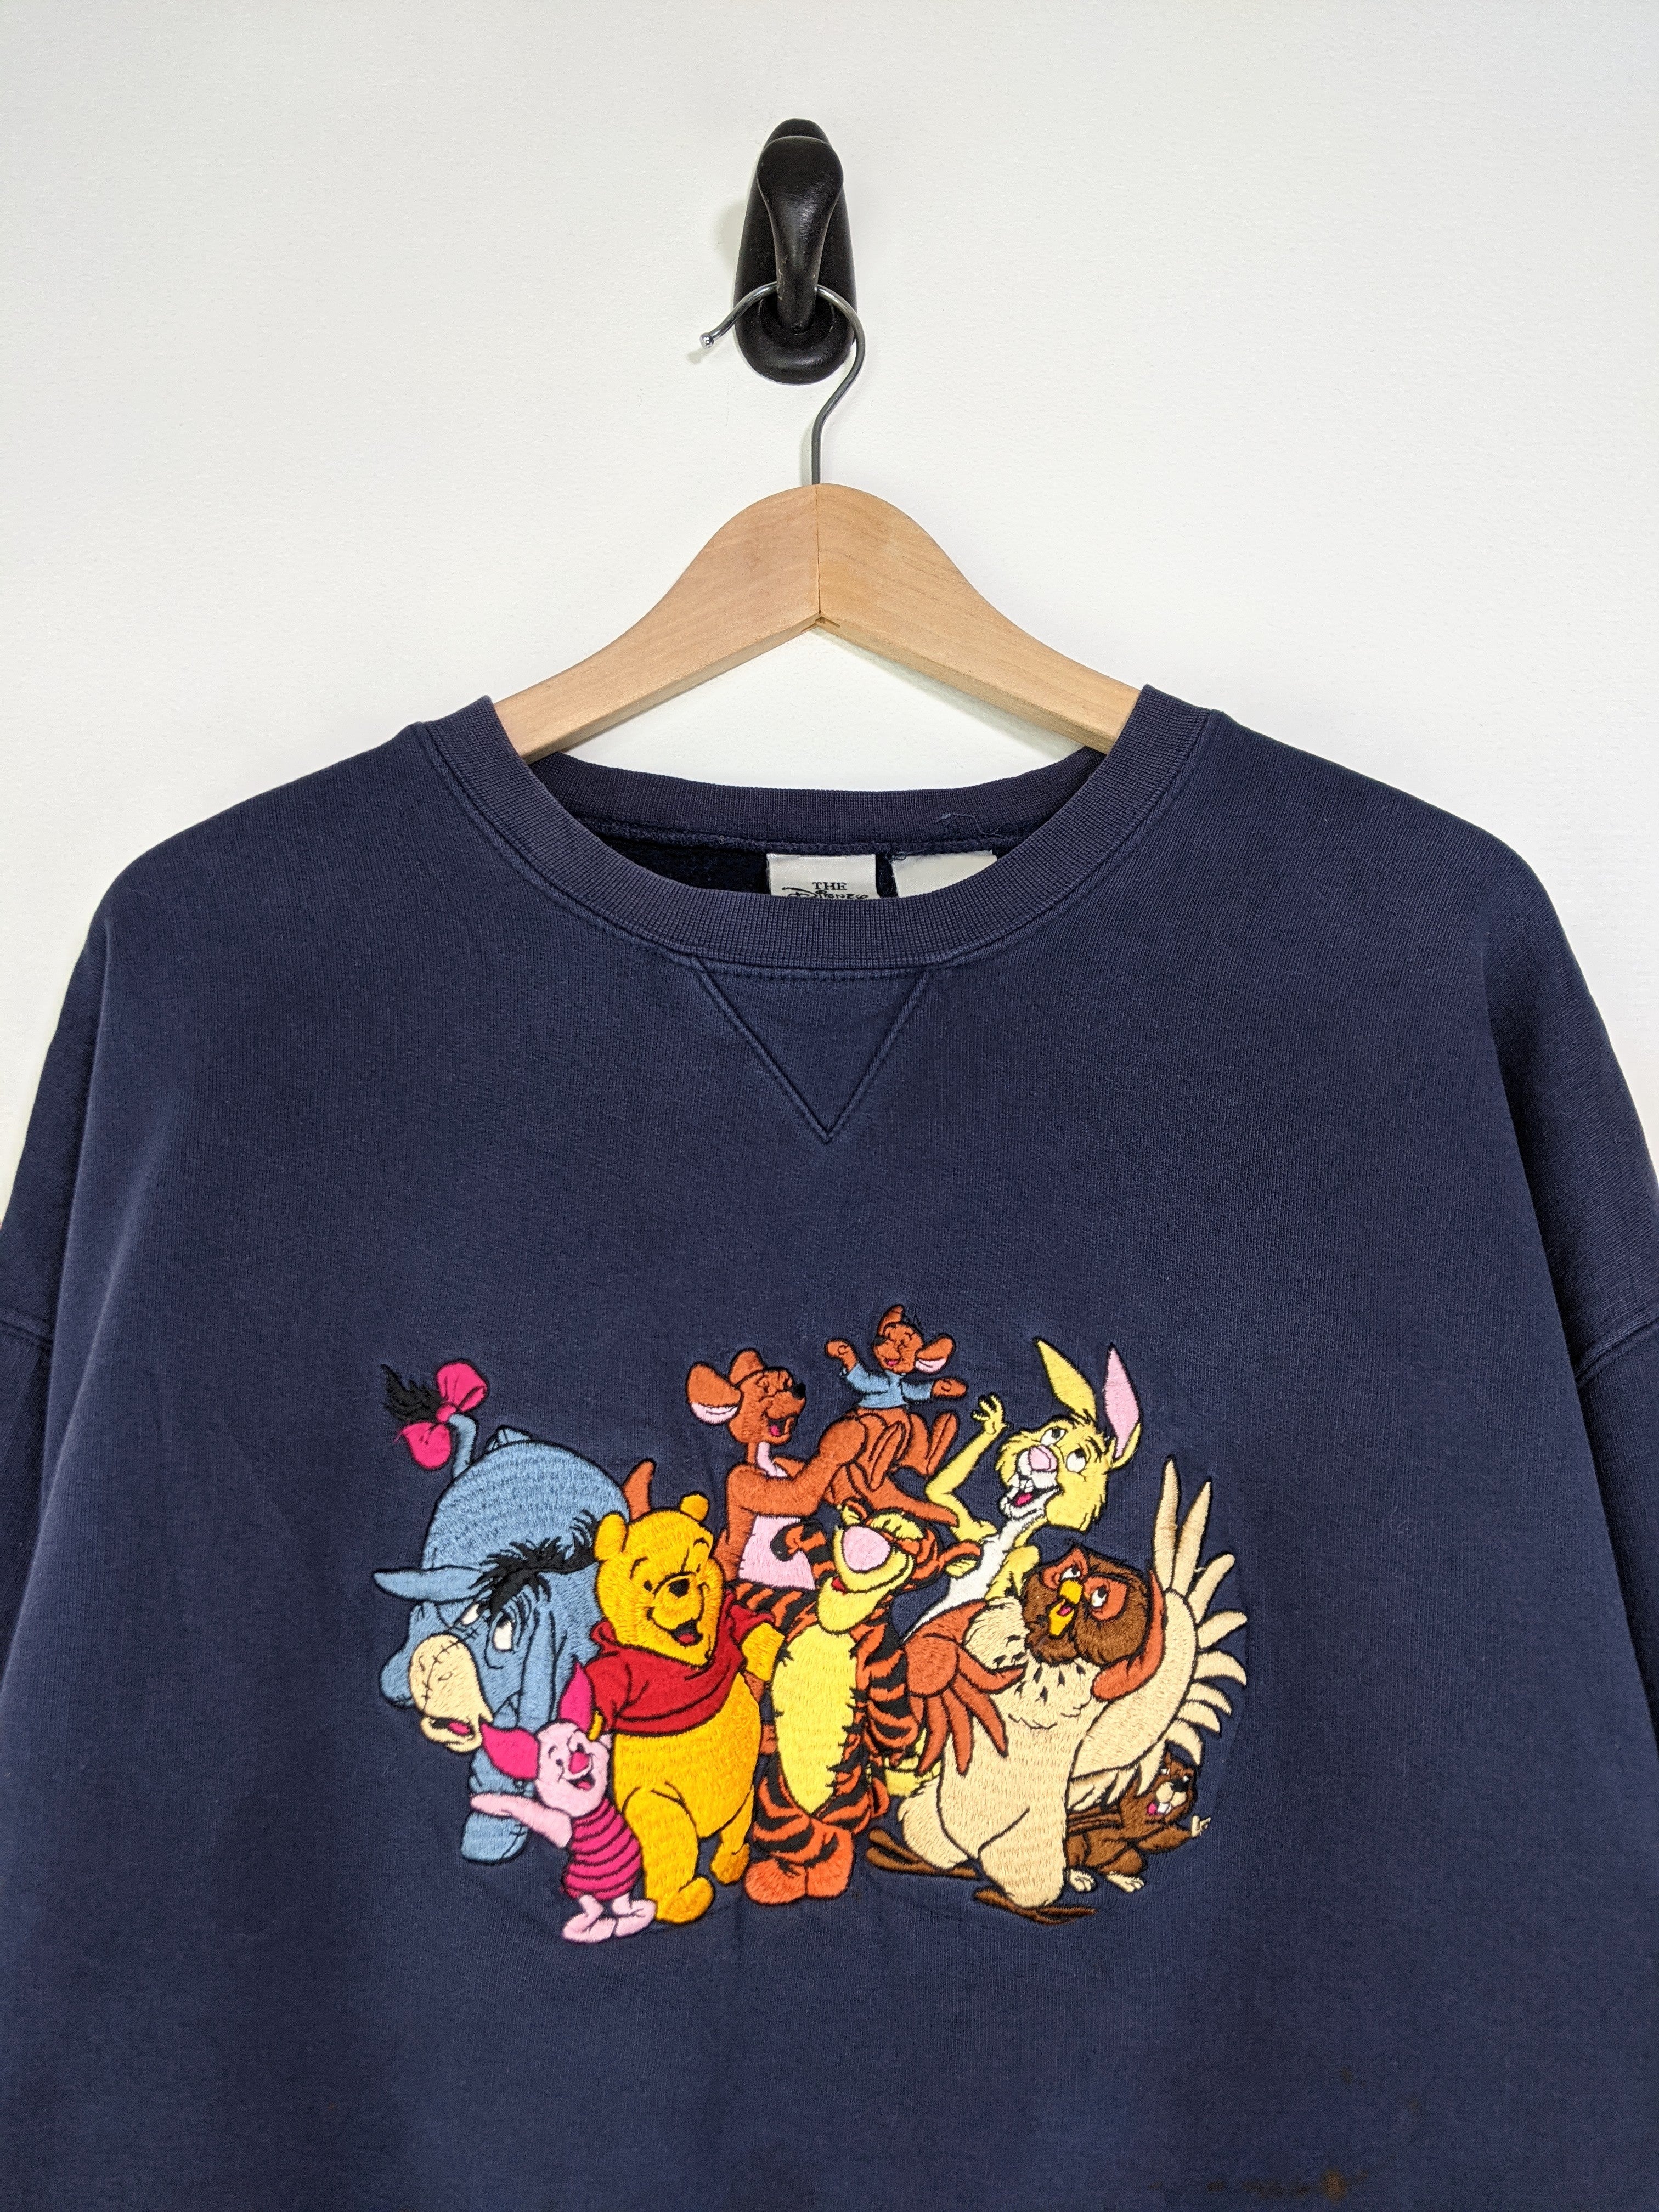 Pooh and Friends Sweatshirt (L)